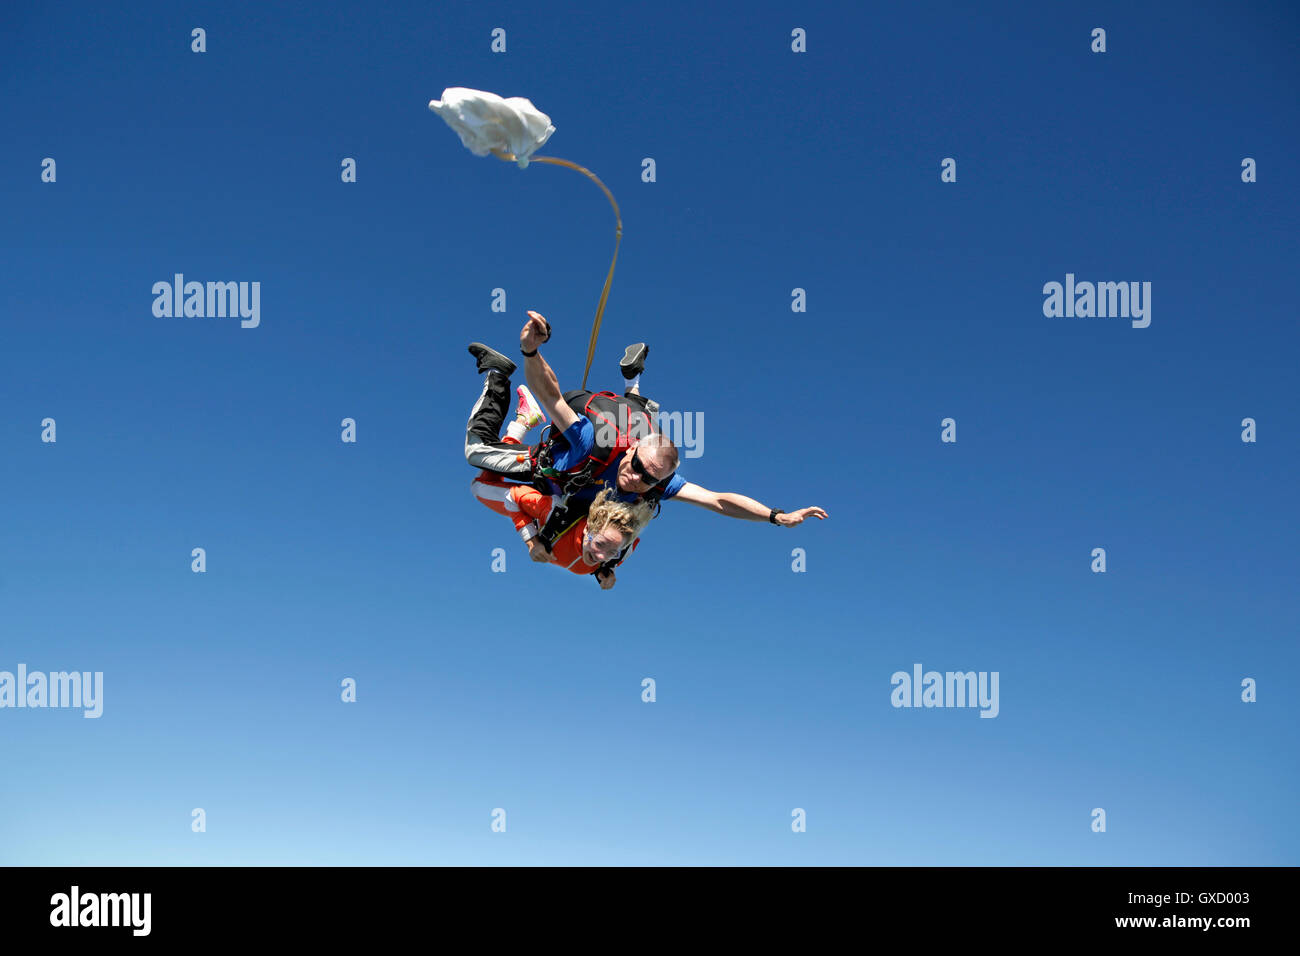 Tandem sky divers free falling with parachute opening, Interlaken, Berne, Switzerland Stock Photo